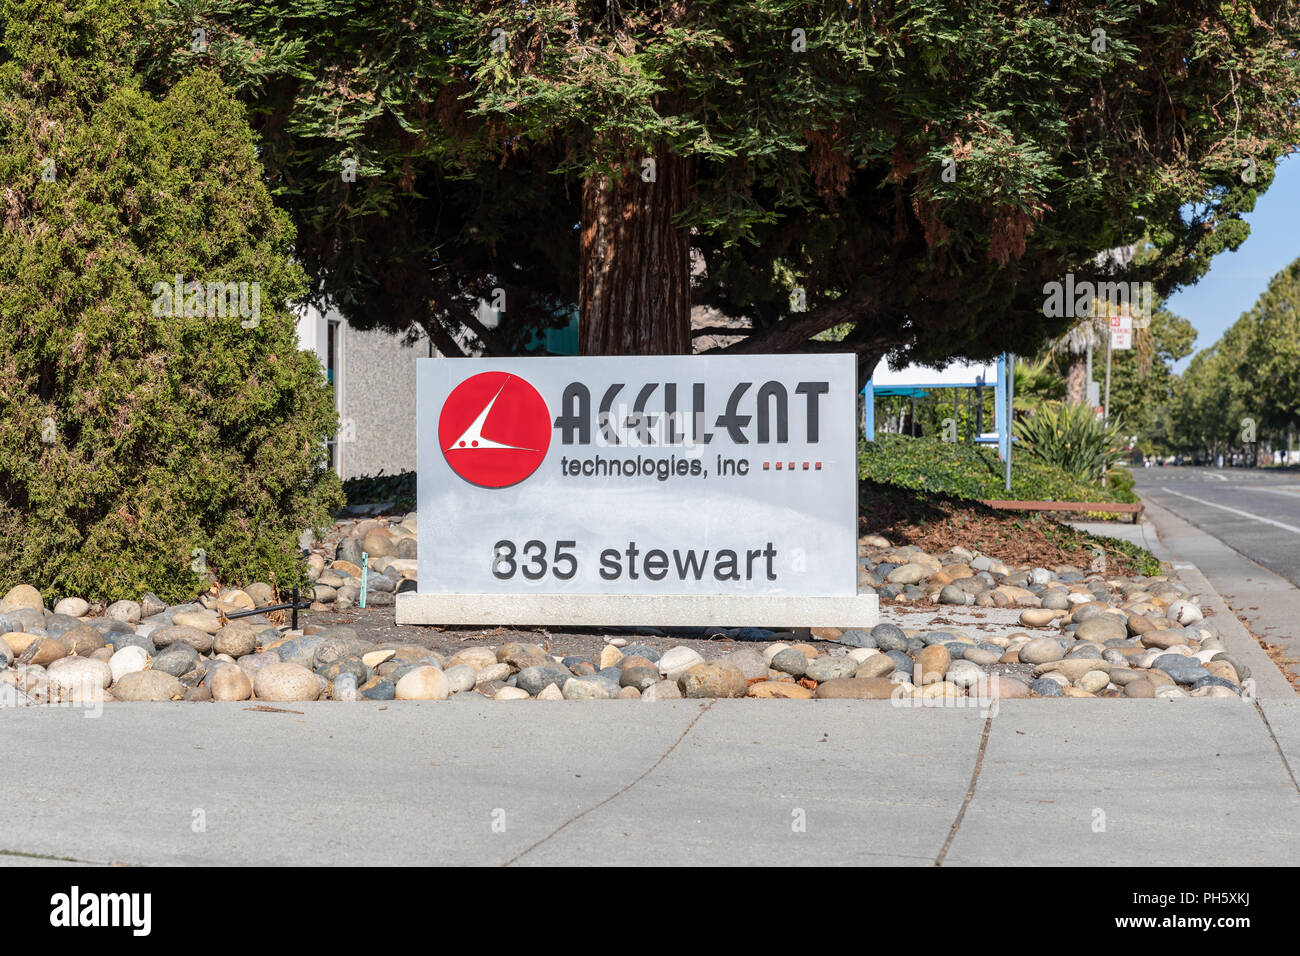 Acellent Technologies, Inc., Sunnyvale, California, USA Stock Photo